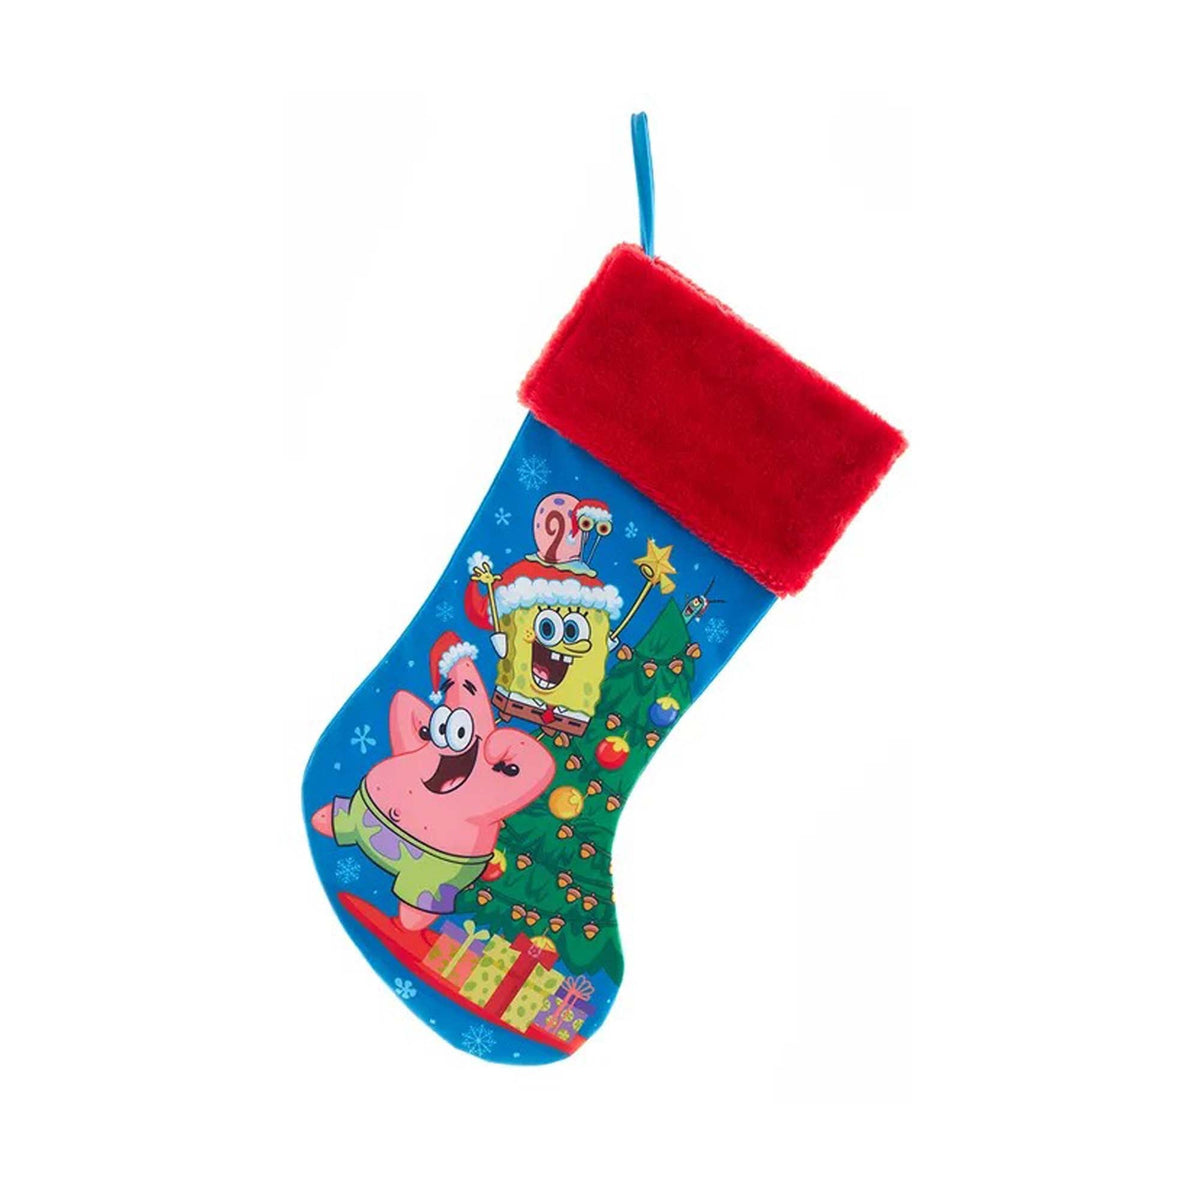 KURT S. ADLER INC Christmas Spongebob Squarepants Christmas Stocking, 19 Inches, 1 Count